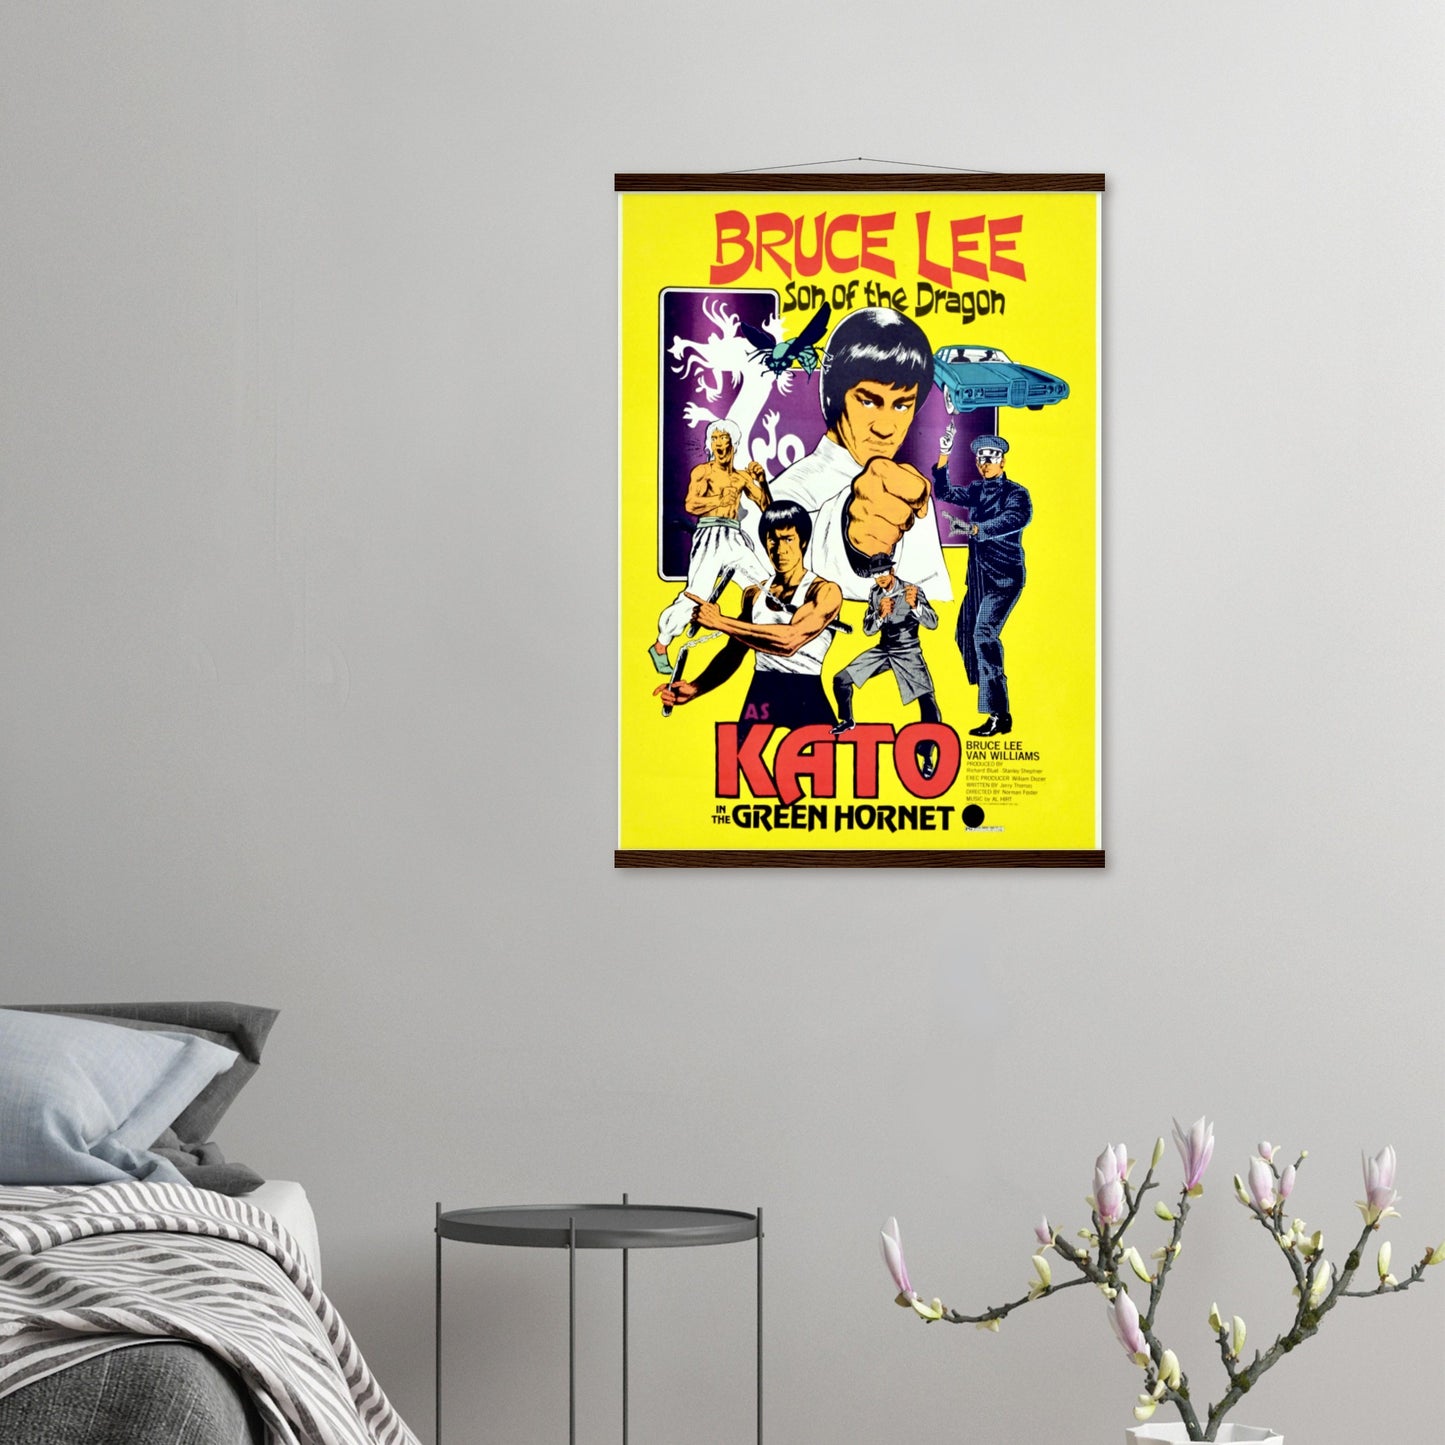 Bruce Lee Vintage Poster Reprint on Premium Matte Paper